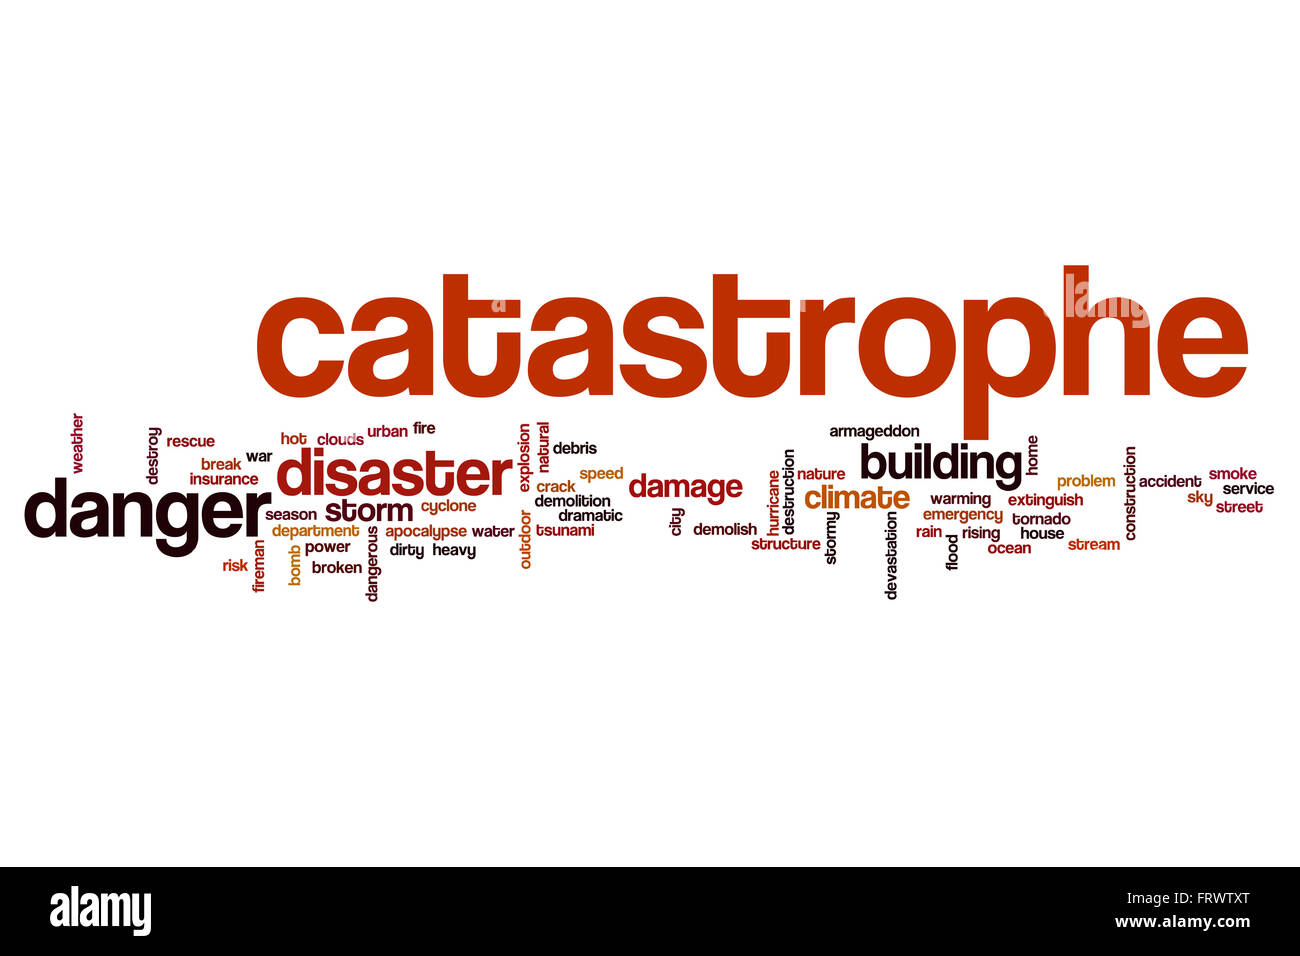 Catastrophe word cloud Stock Photo